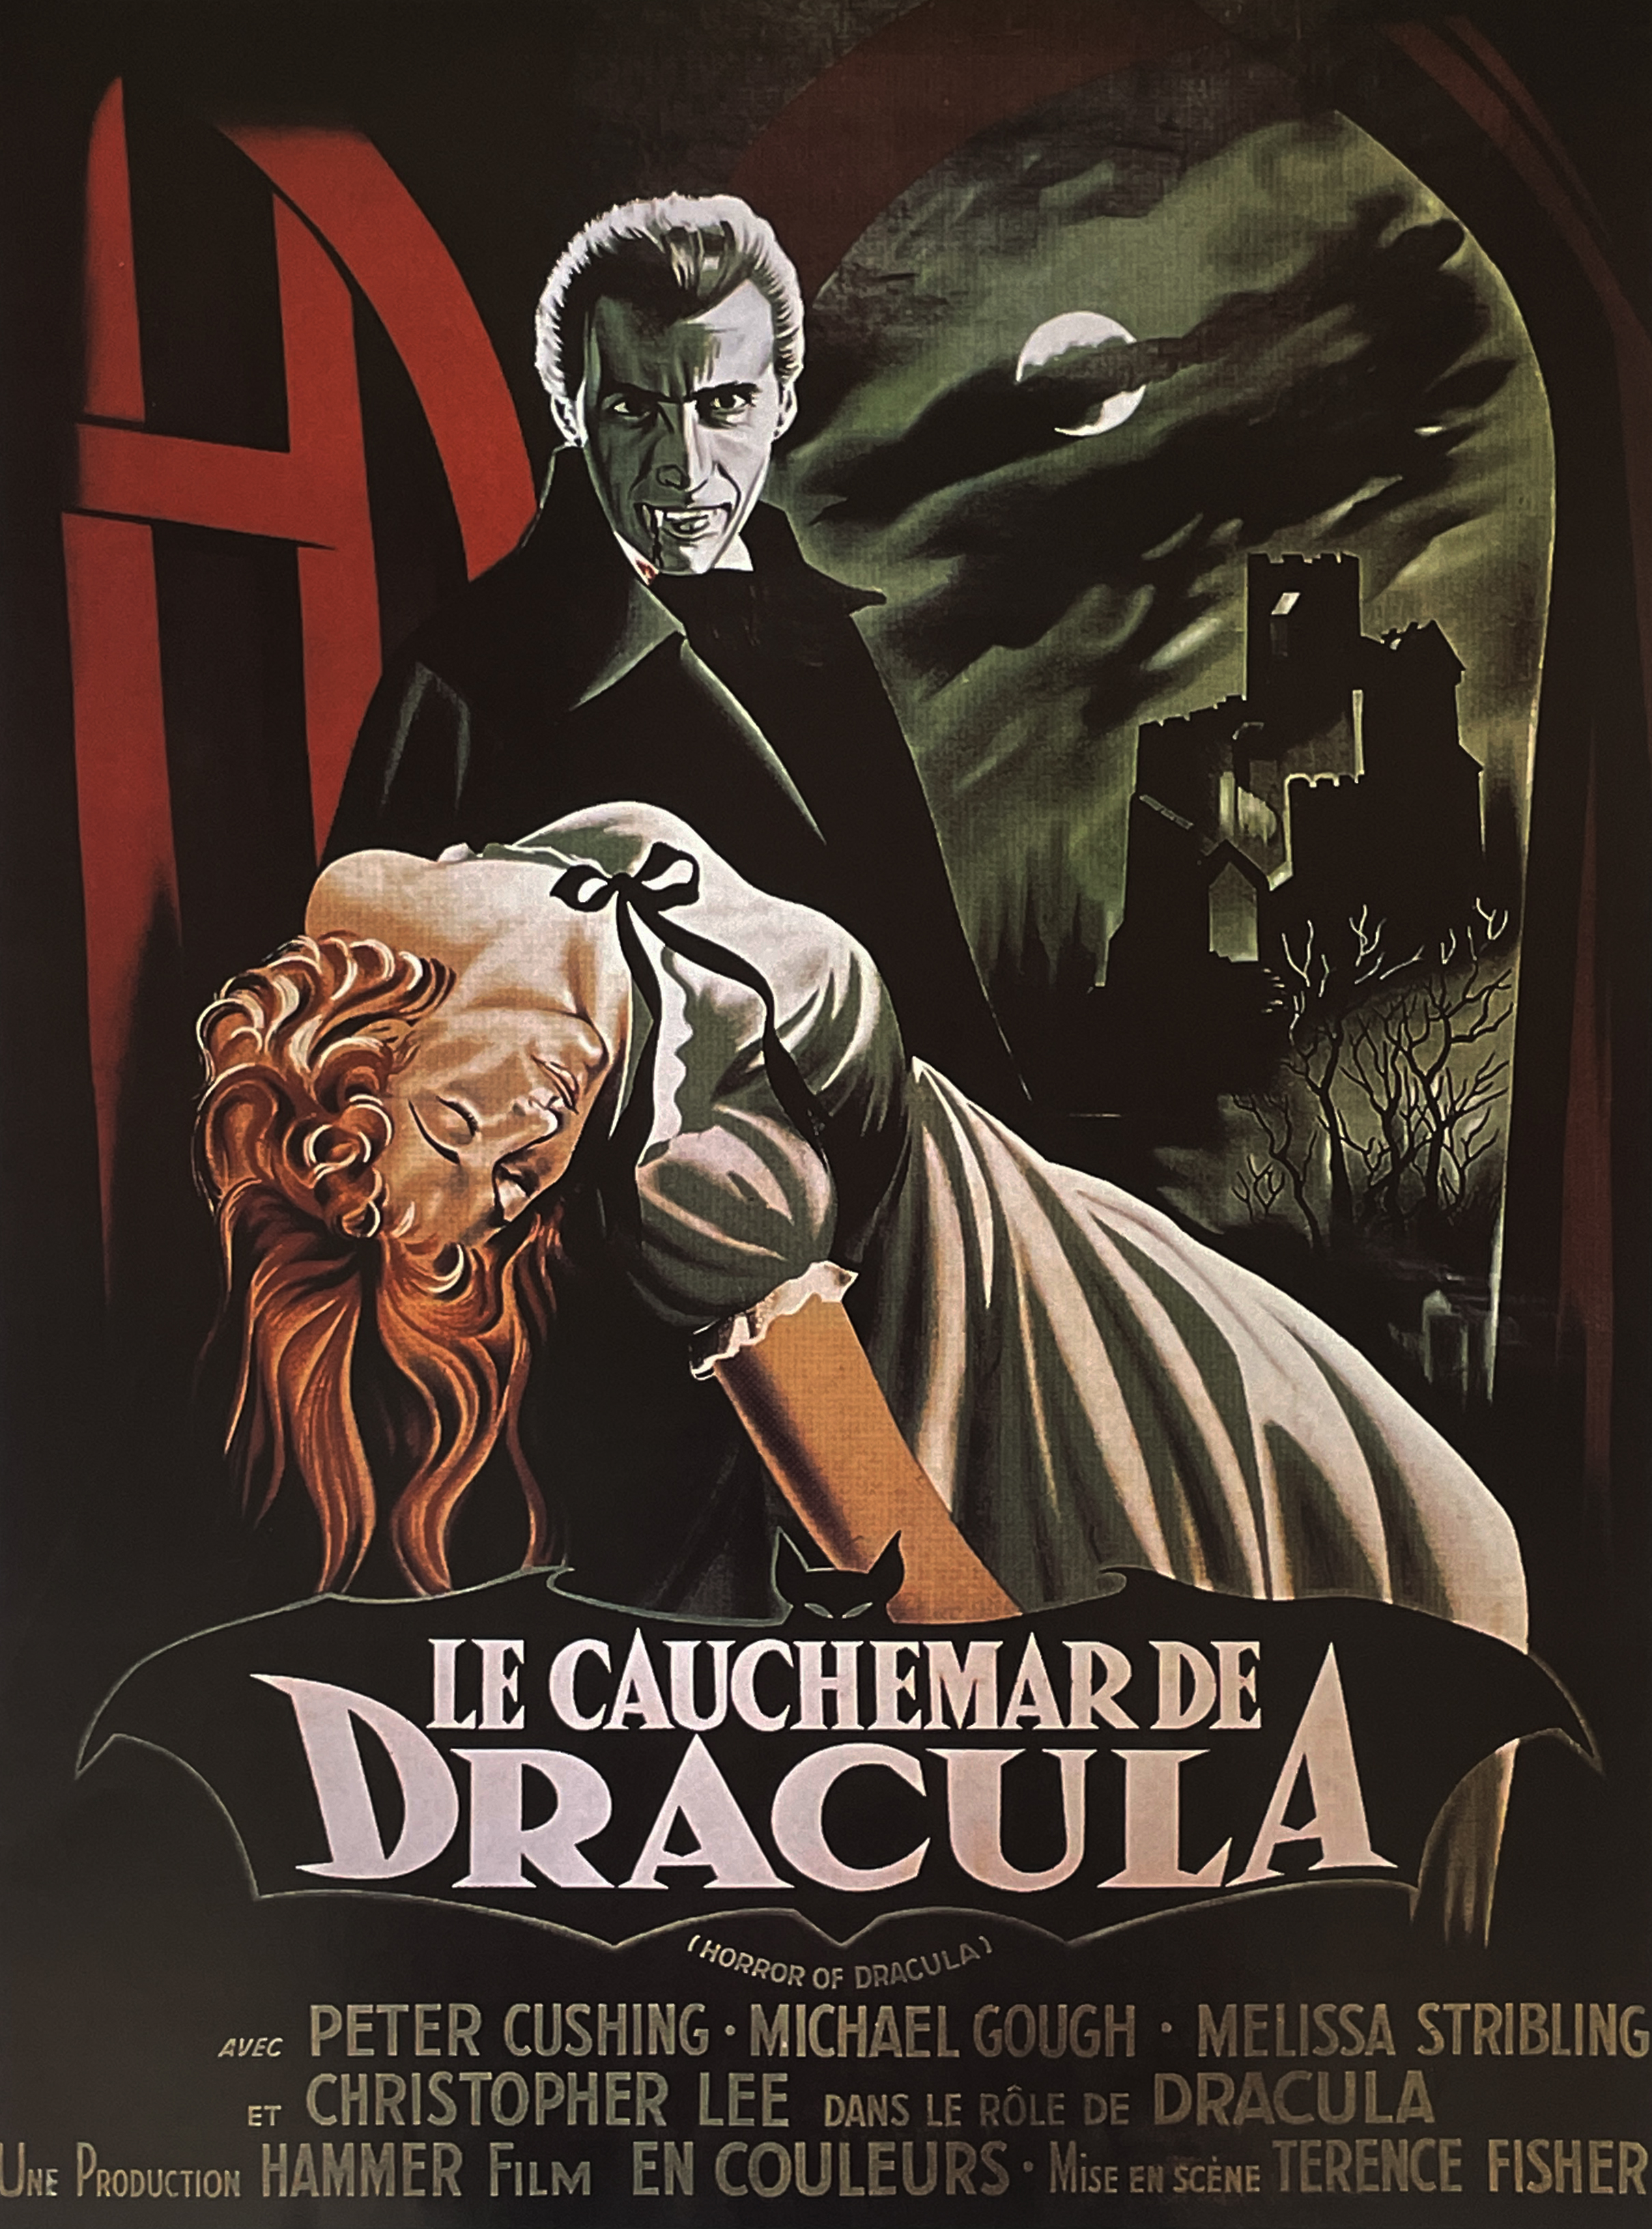 Le Cauchemarde de Dracula (Horror of Dracula)